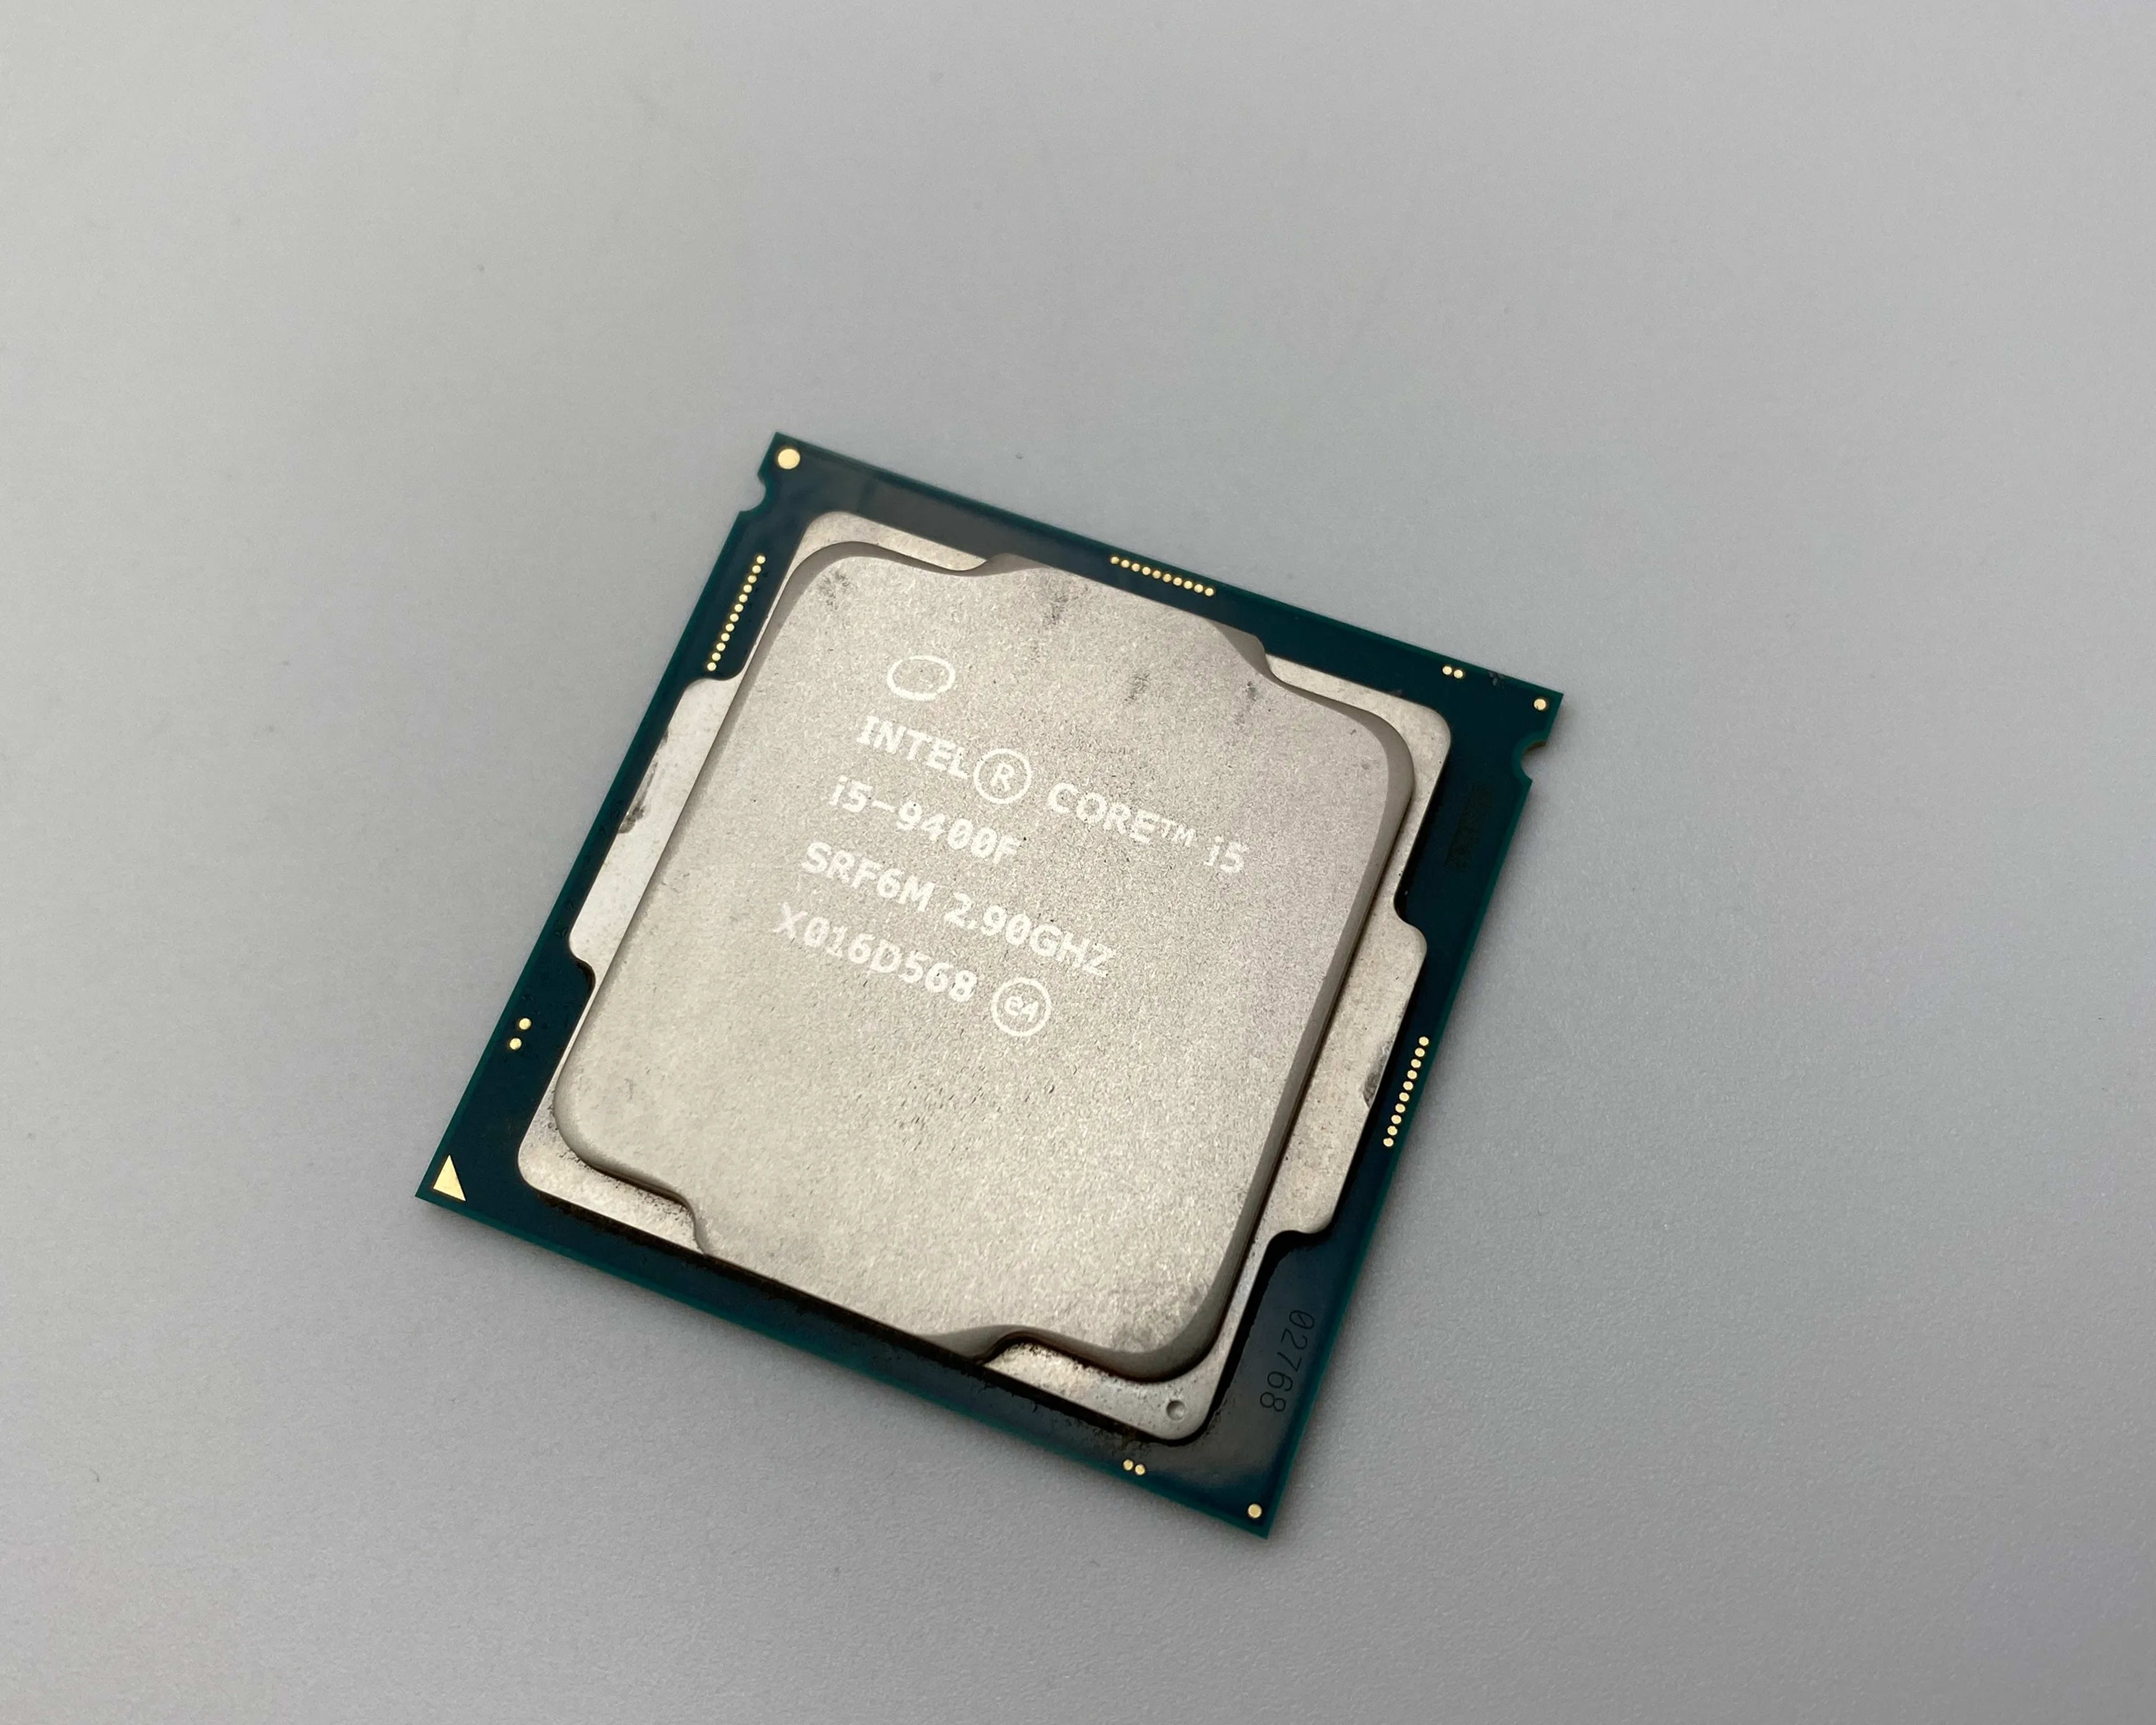 Intel Core i5-9400F 2.9GHz LGA1151 (300 Series) Coffee Lake Desktop Processor